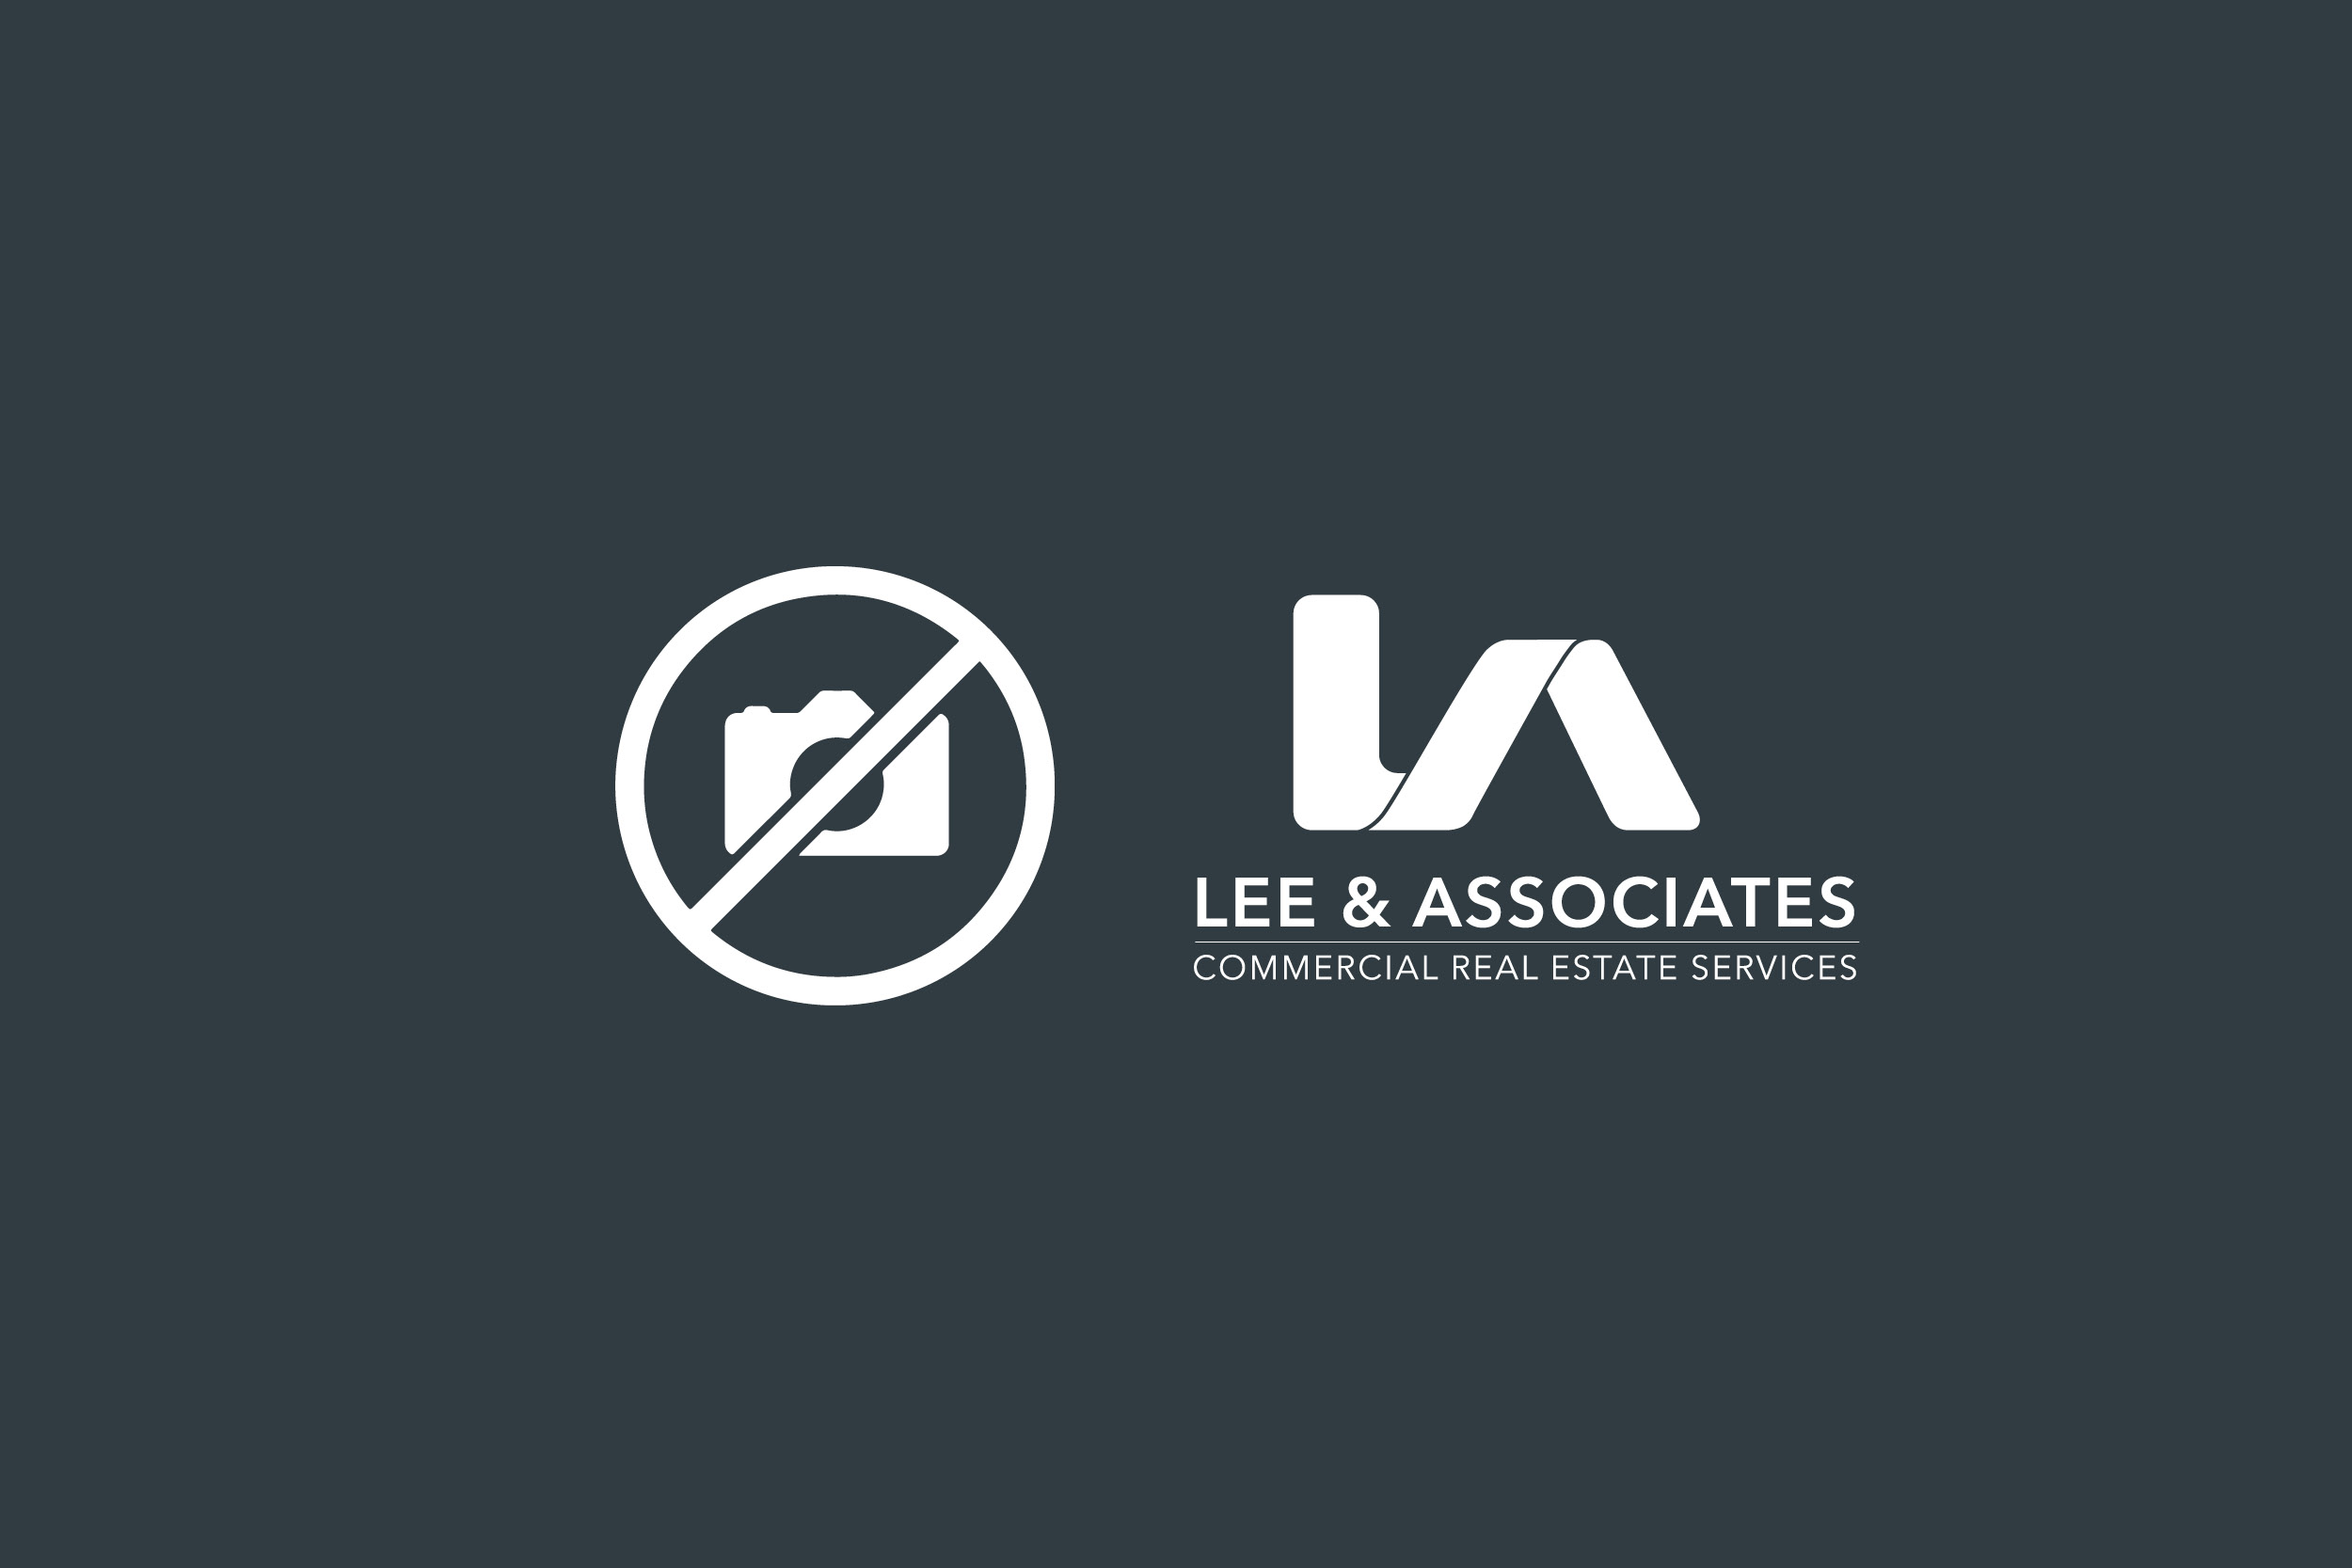 Lee & Associates Dallas Fort Worth Negotiates a 21,136 SF Industrial Lease Transaction